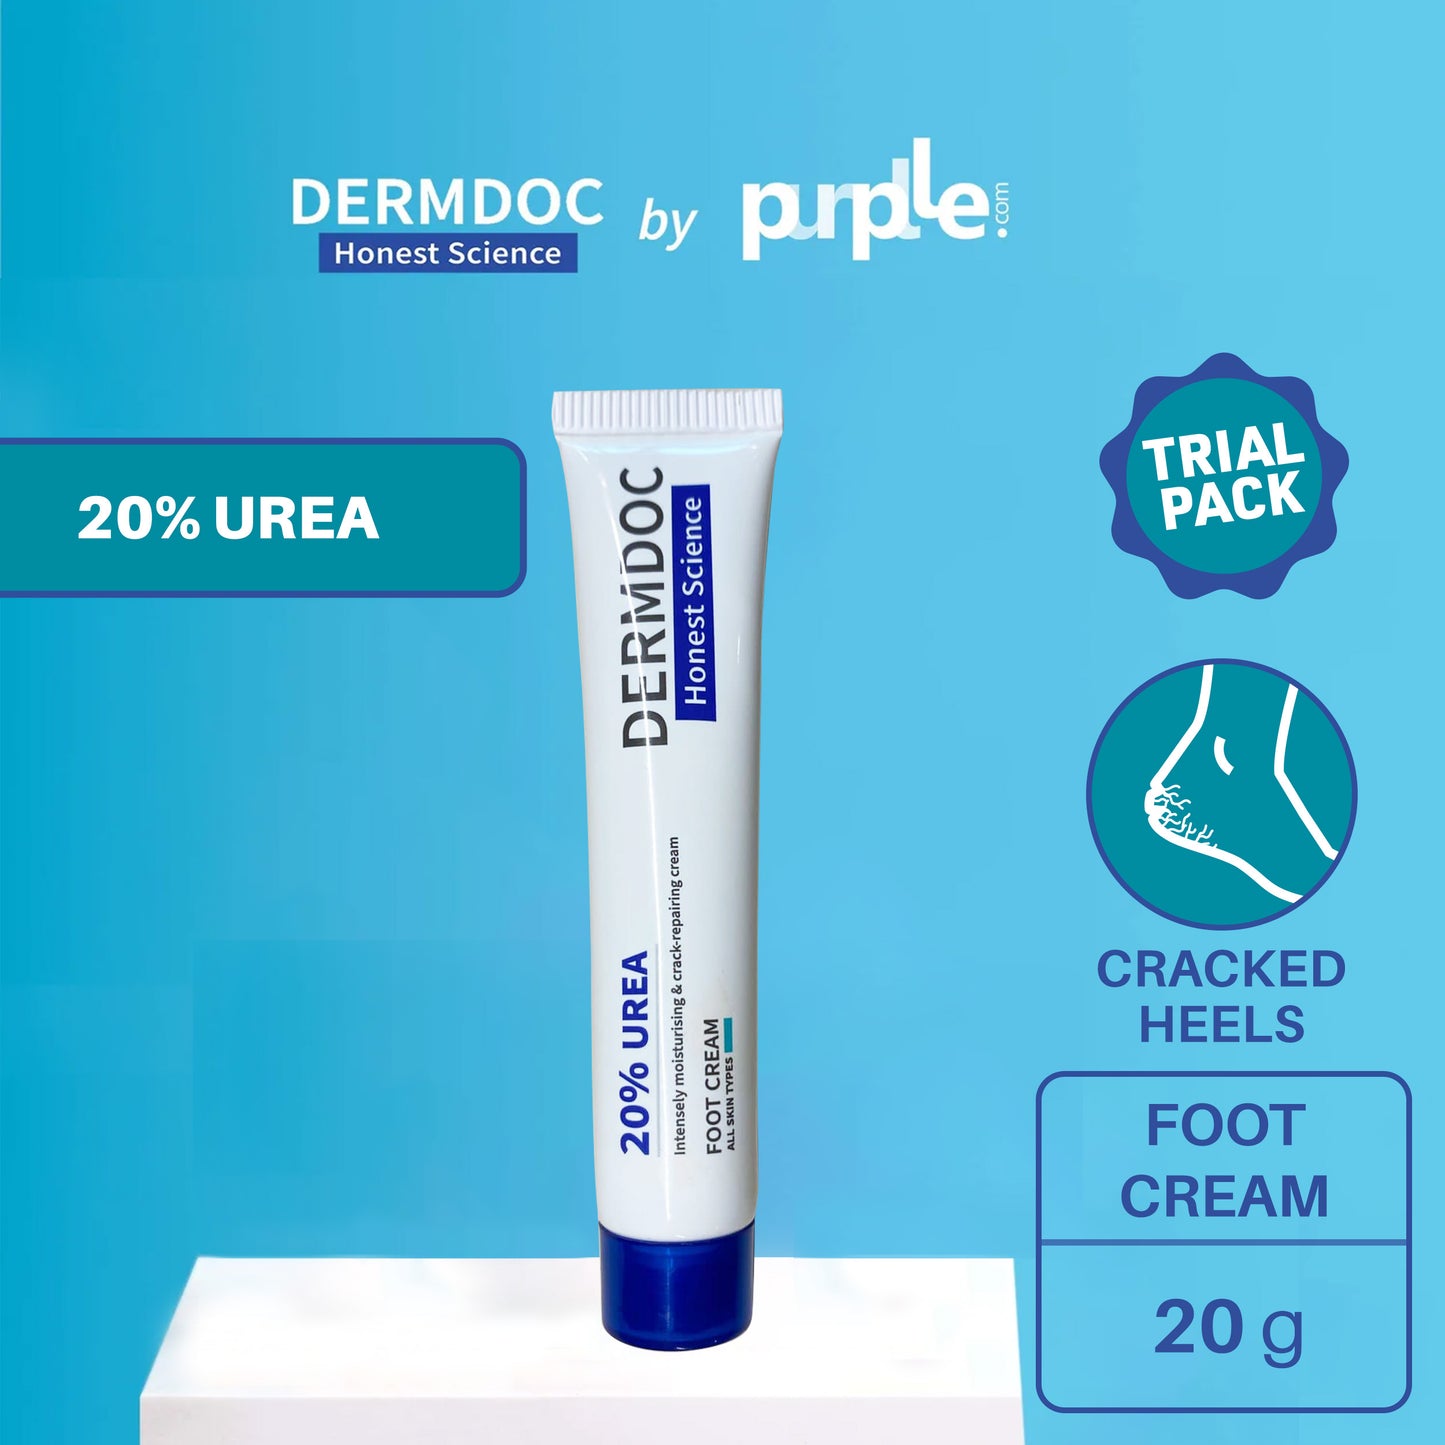 DERMDOC 20% Urea Foot Cream (20 g)